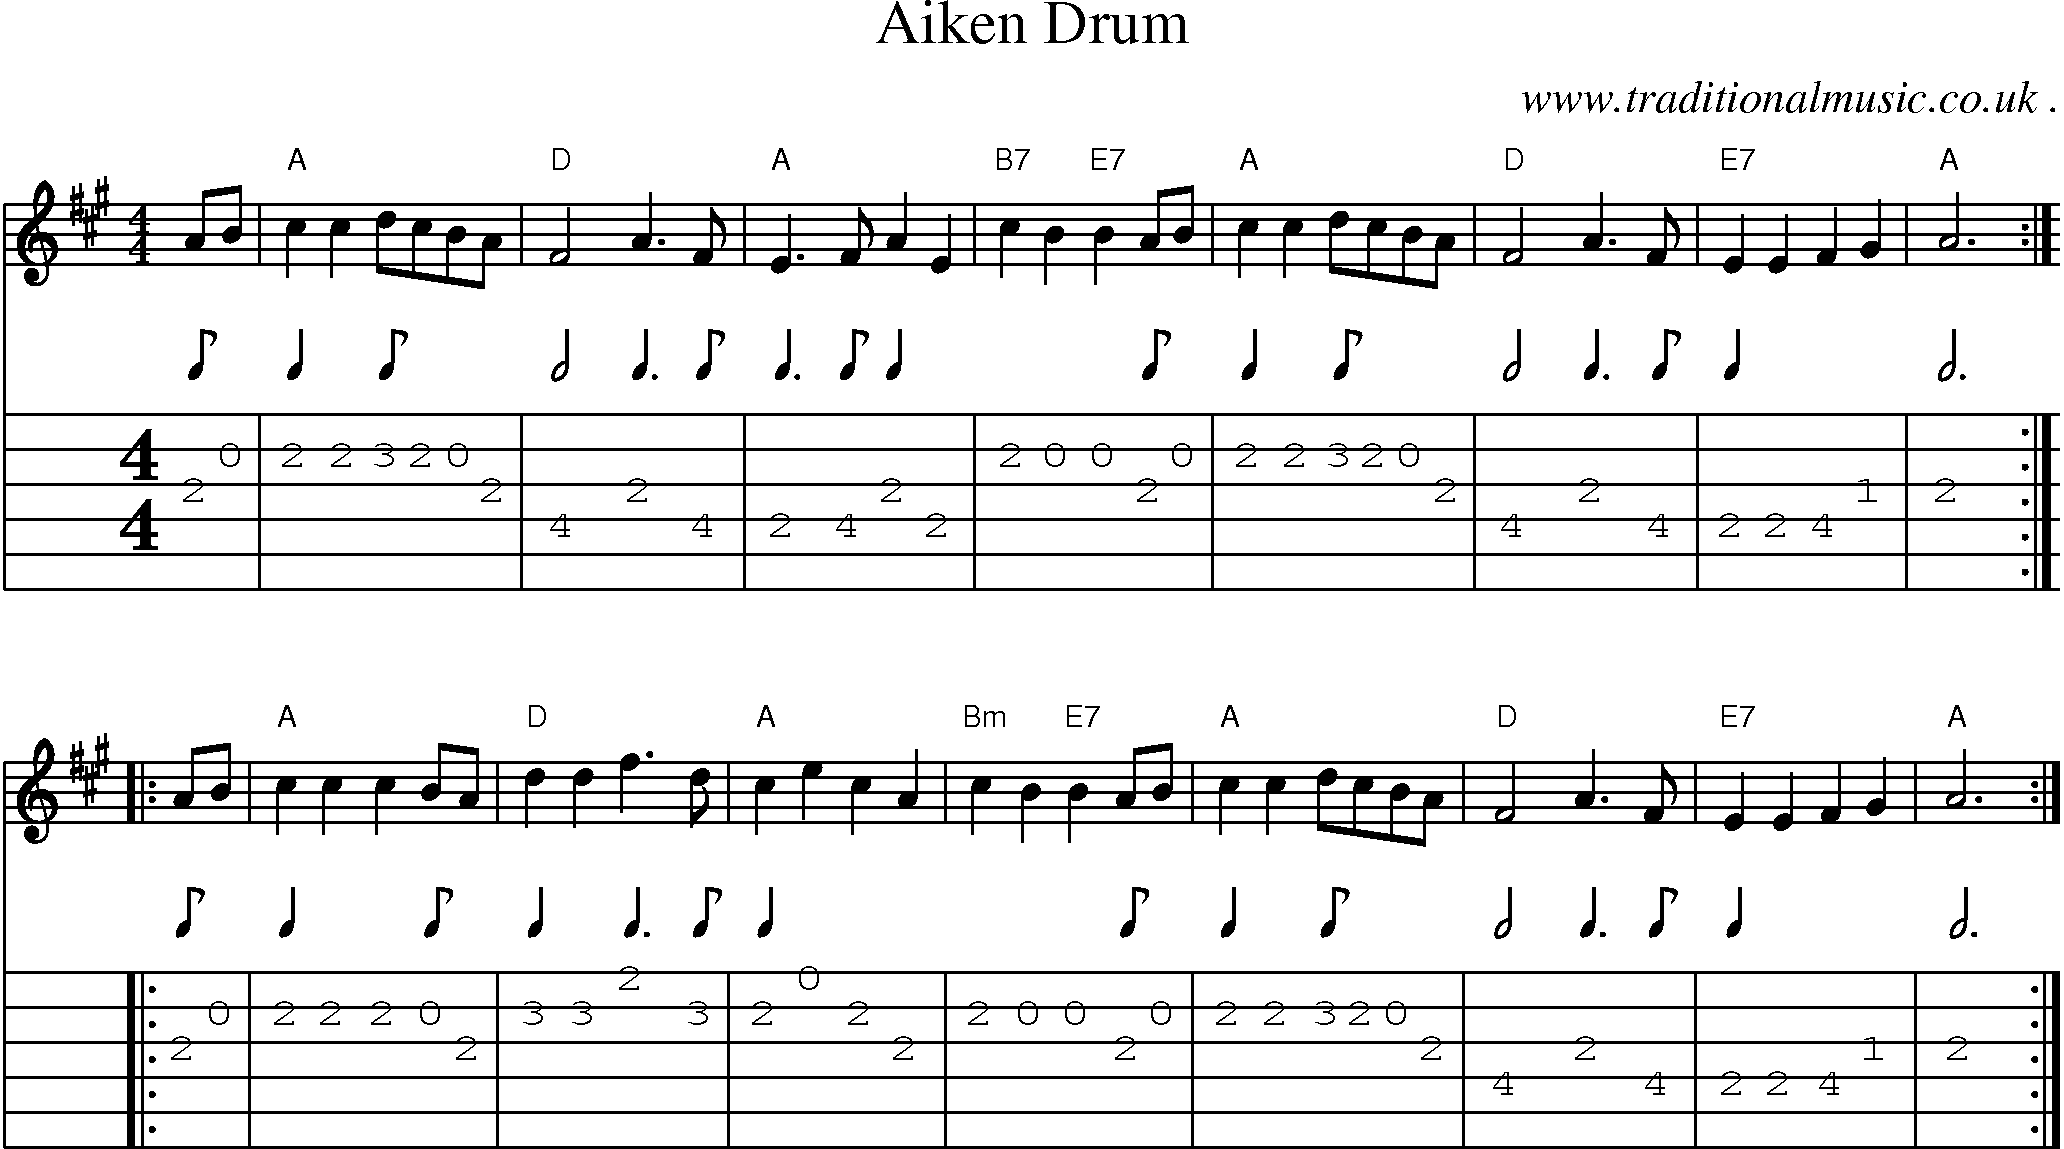 Sheet-Music and Guitar Tabs for Aiken Drum